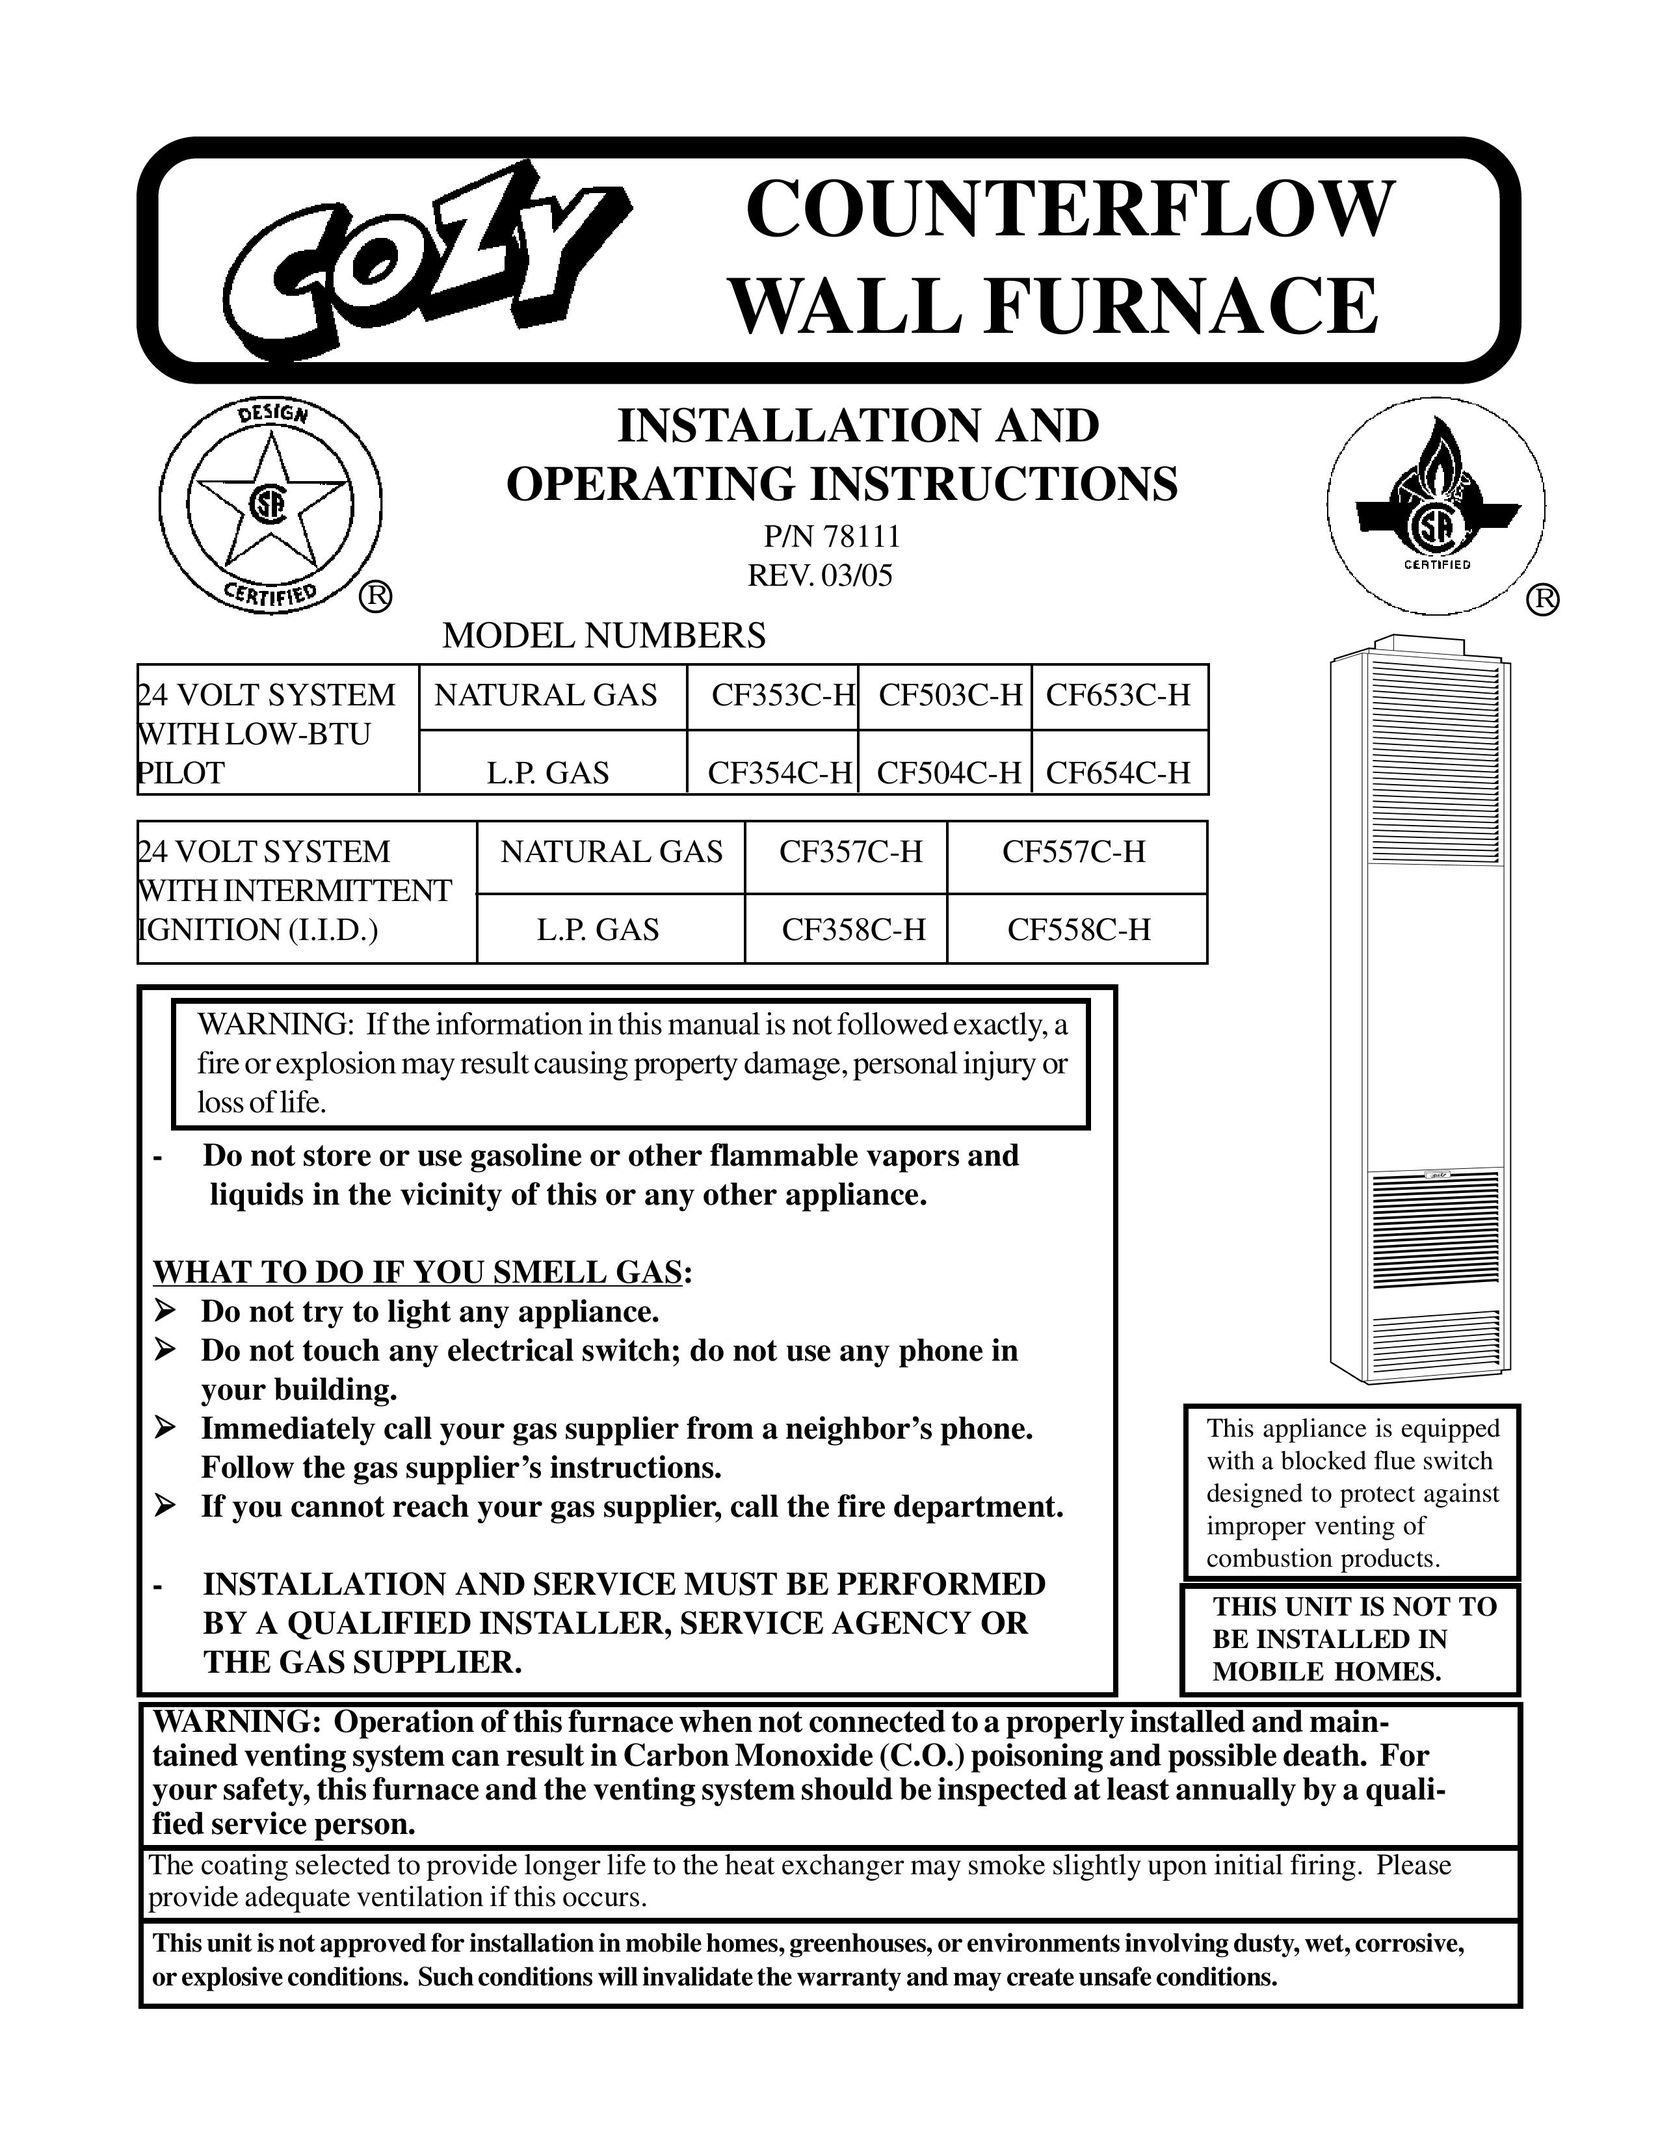 Louisville Tin and Stove CF654C-H Furnace User Manual